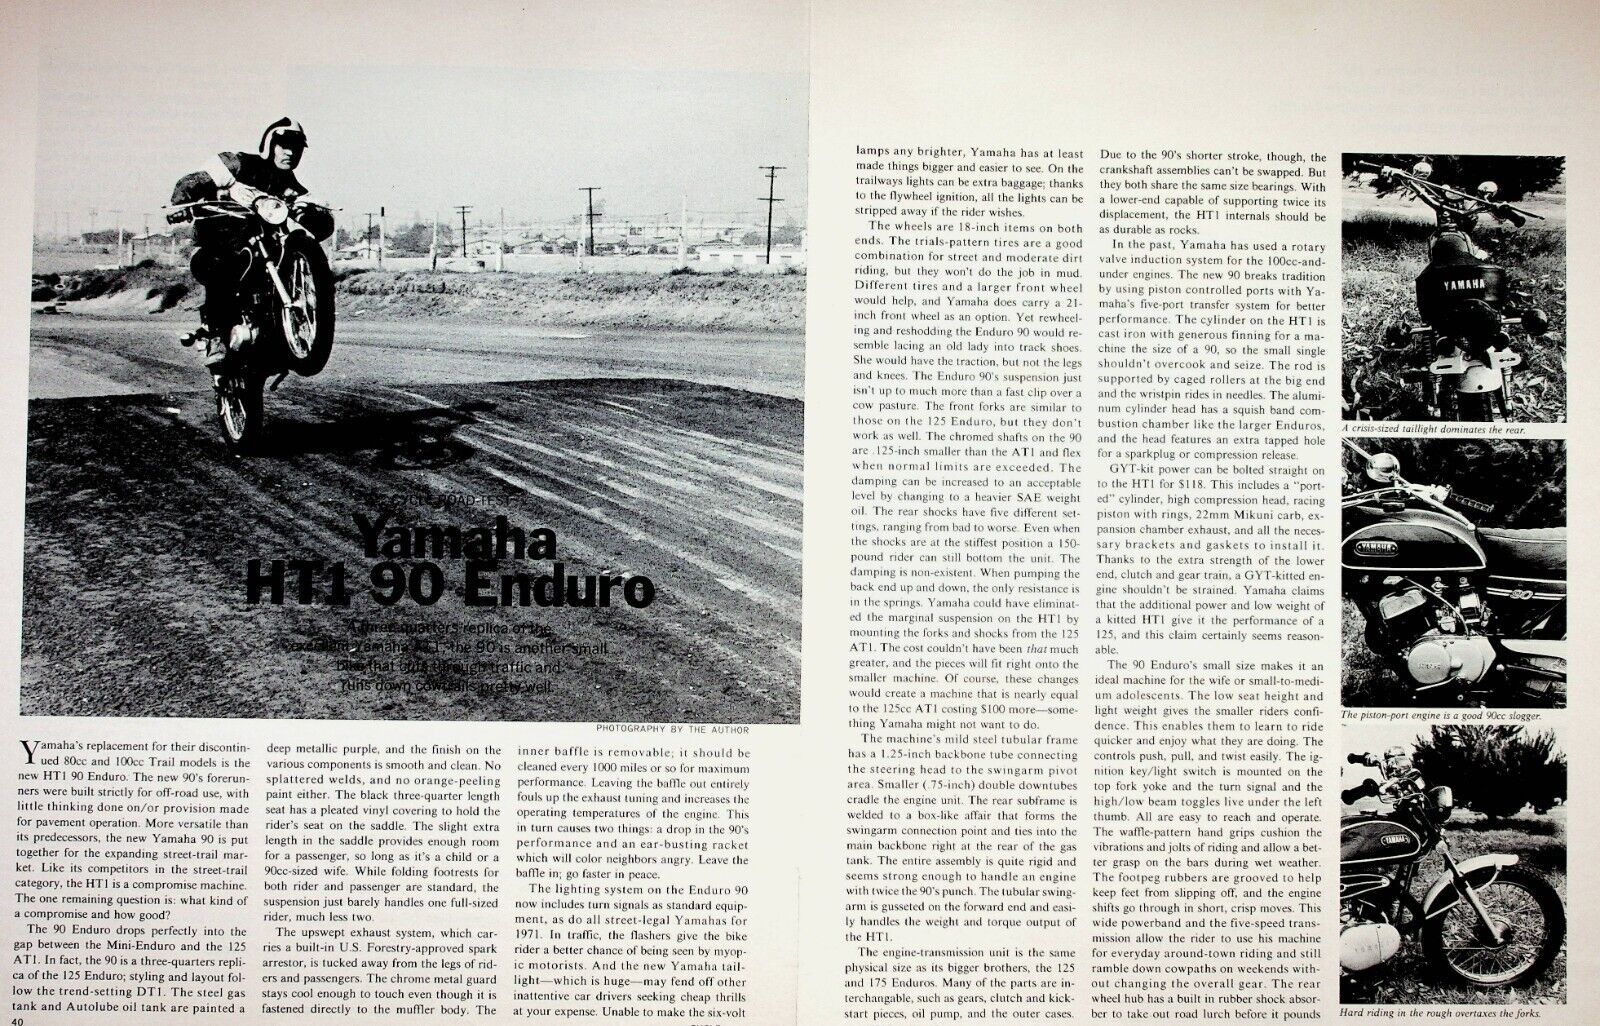 1971 Yamaha HT1 90 Enduro Motorcycle Road Test - 3-Page Vintage Article